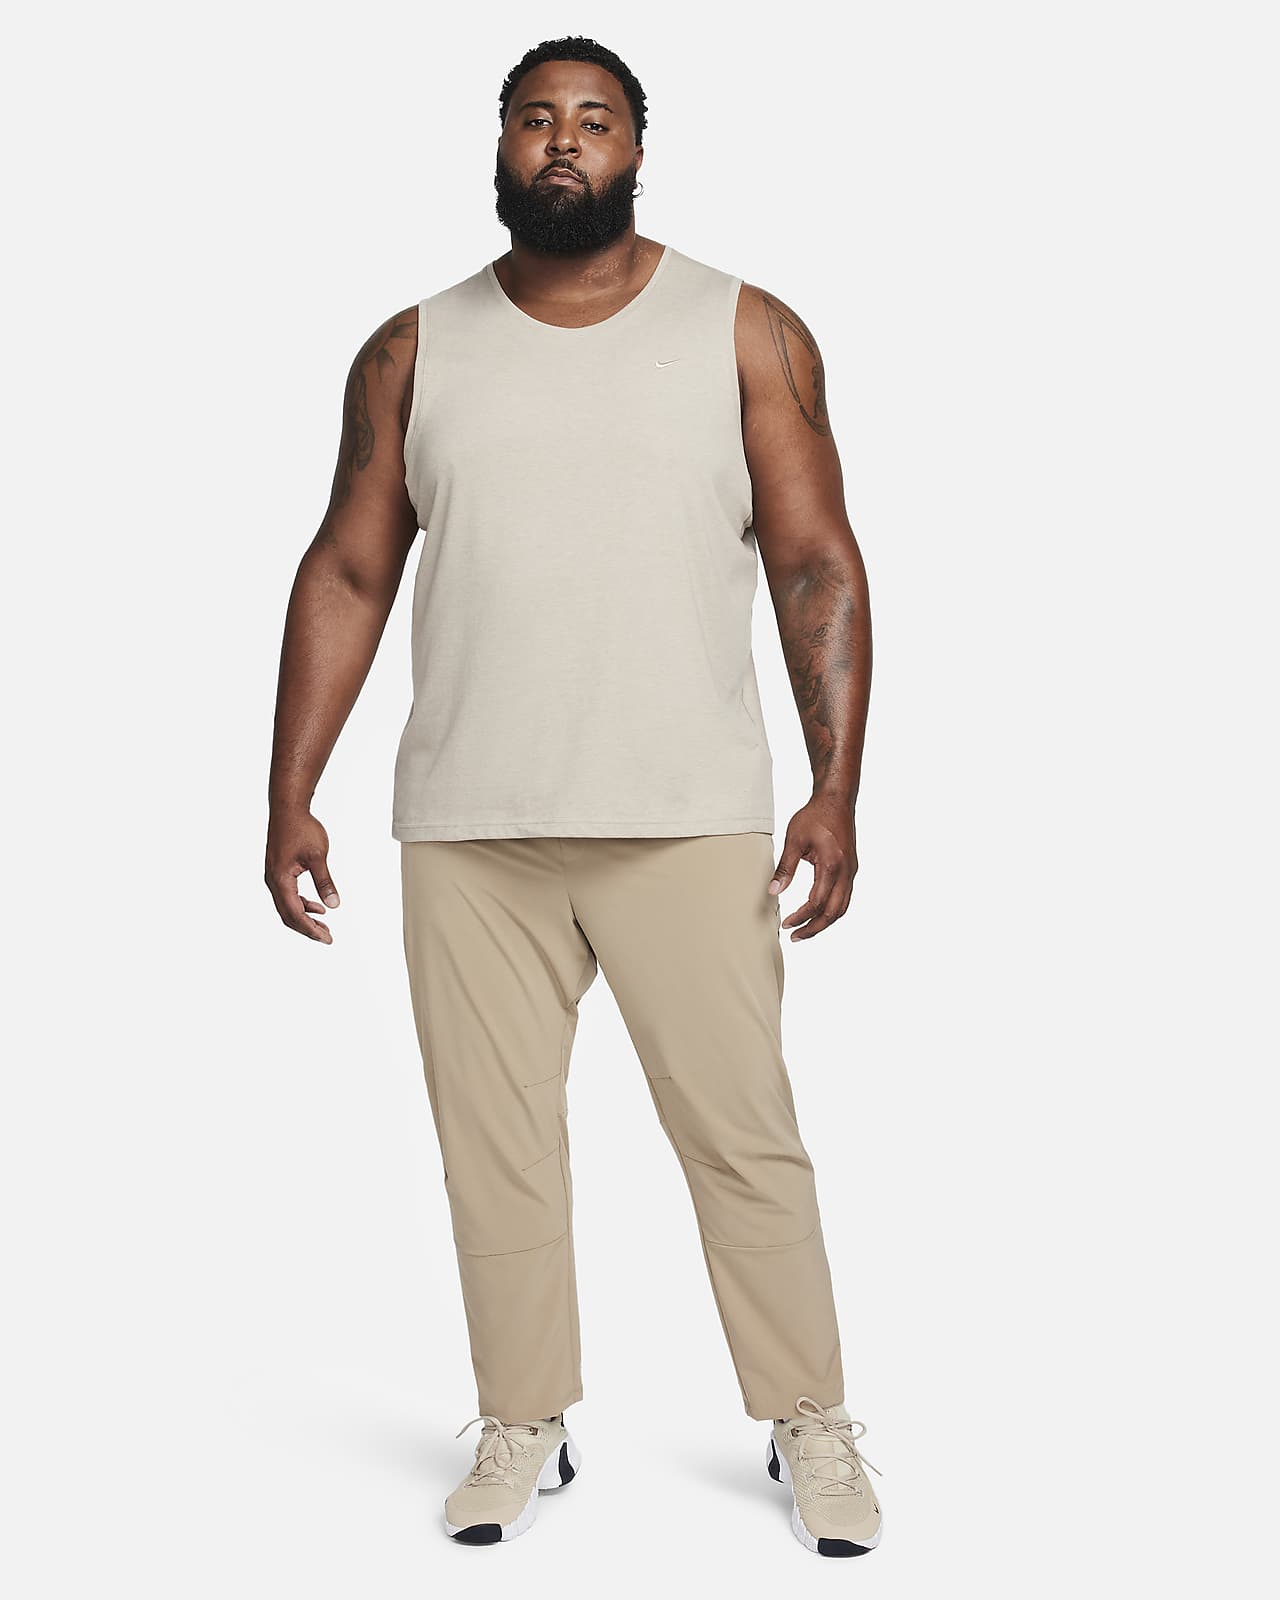 Performance Tank Tops & Sleeveless Shirts Sports Bras. Nike LU